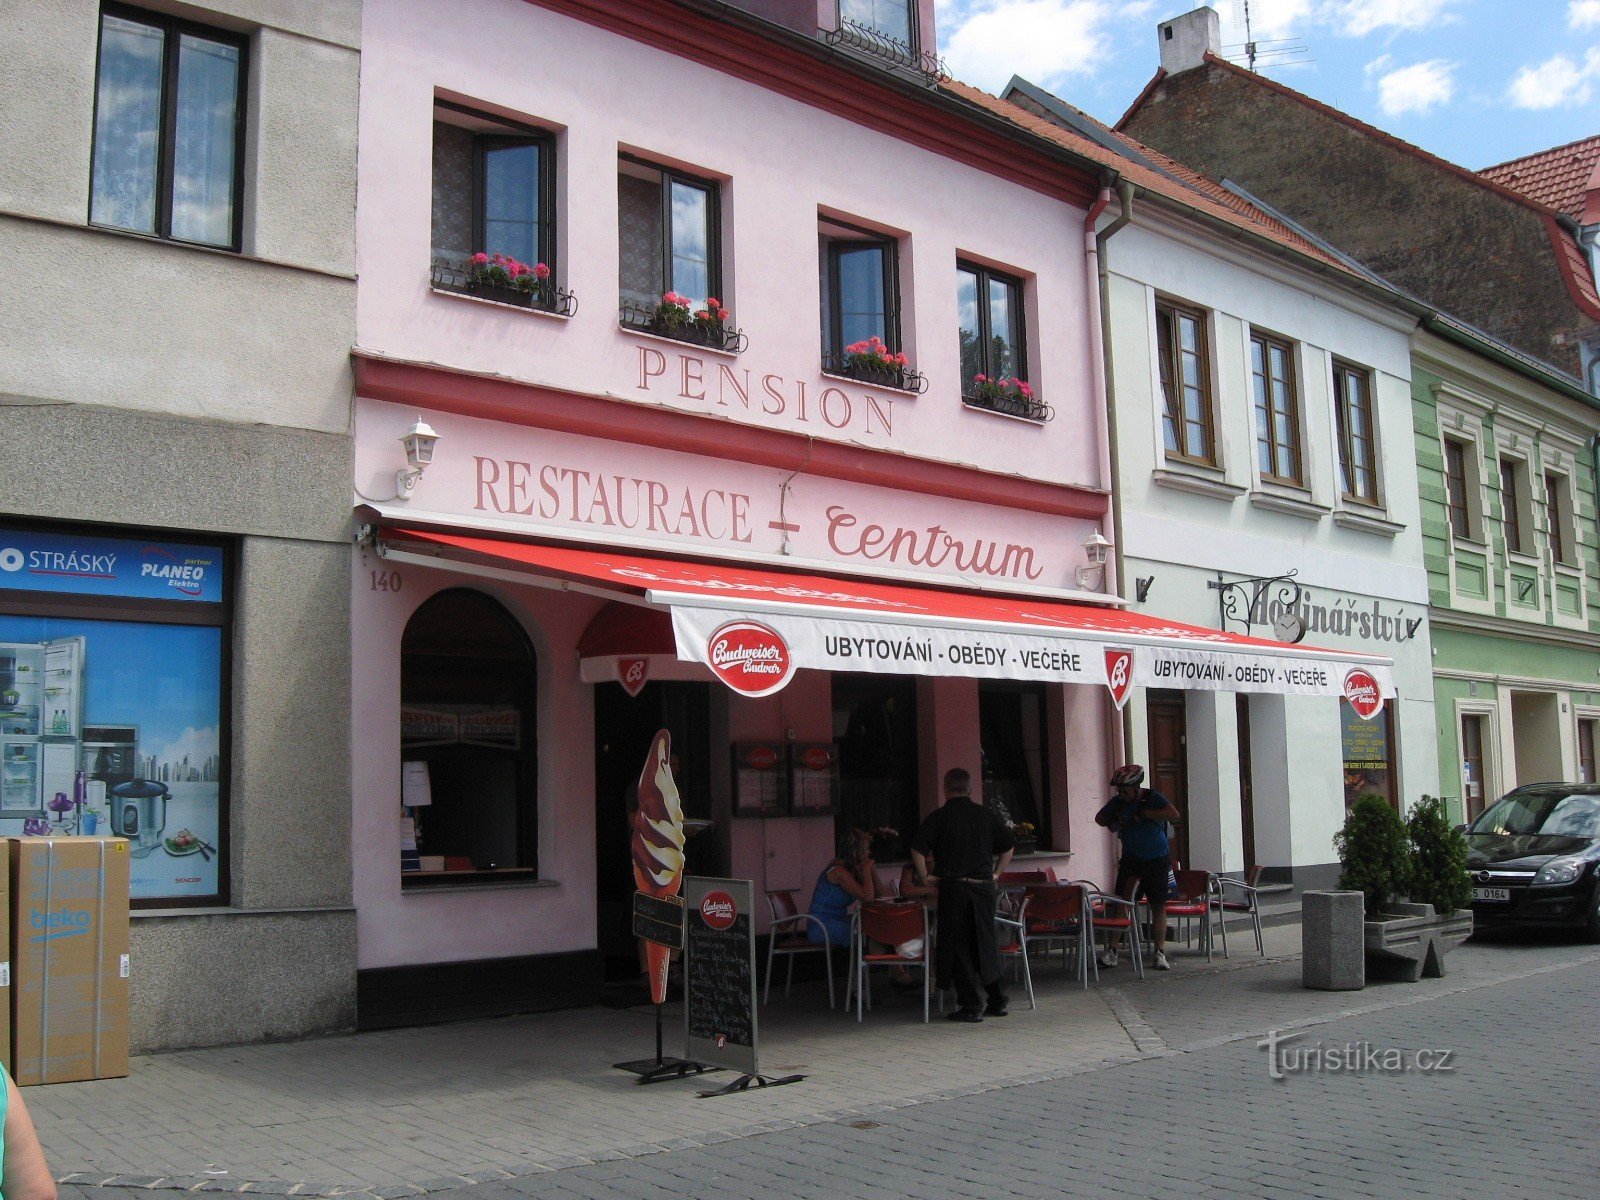 Trhové Sviny - restaurant en pension